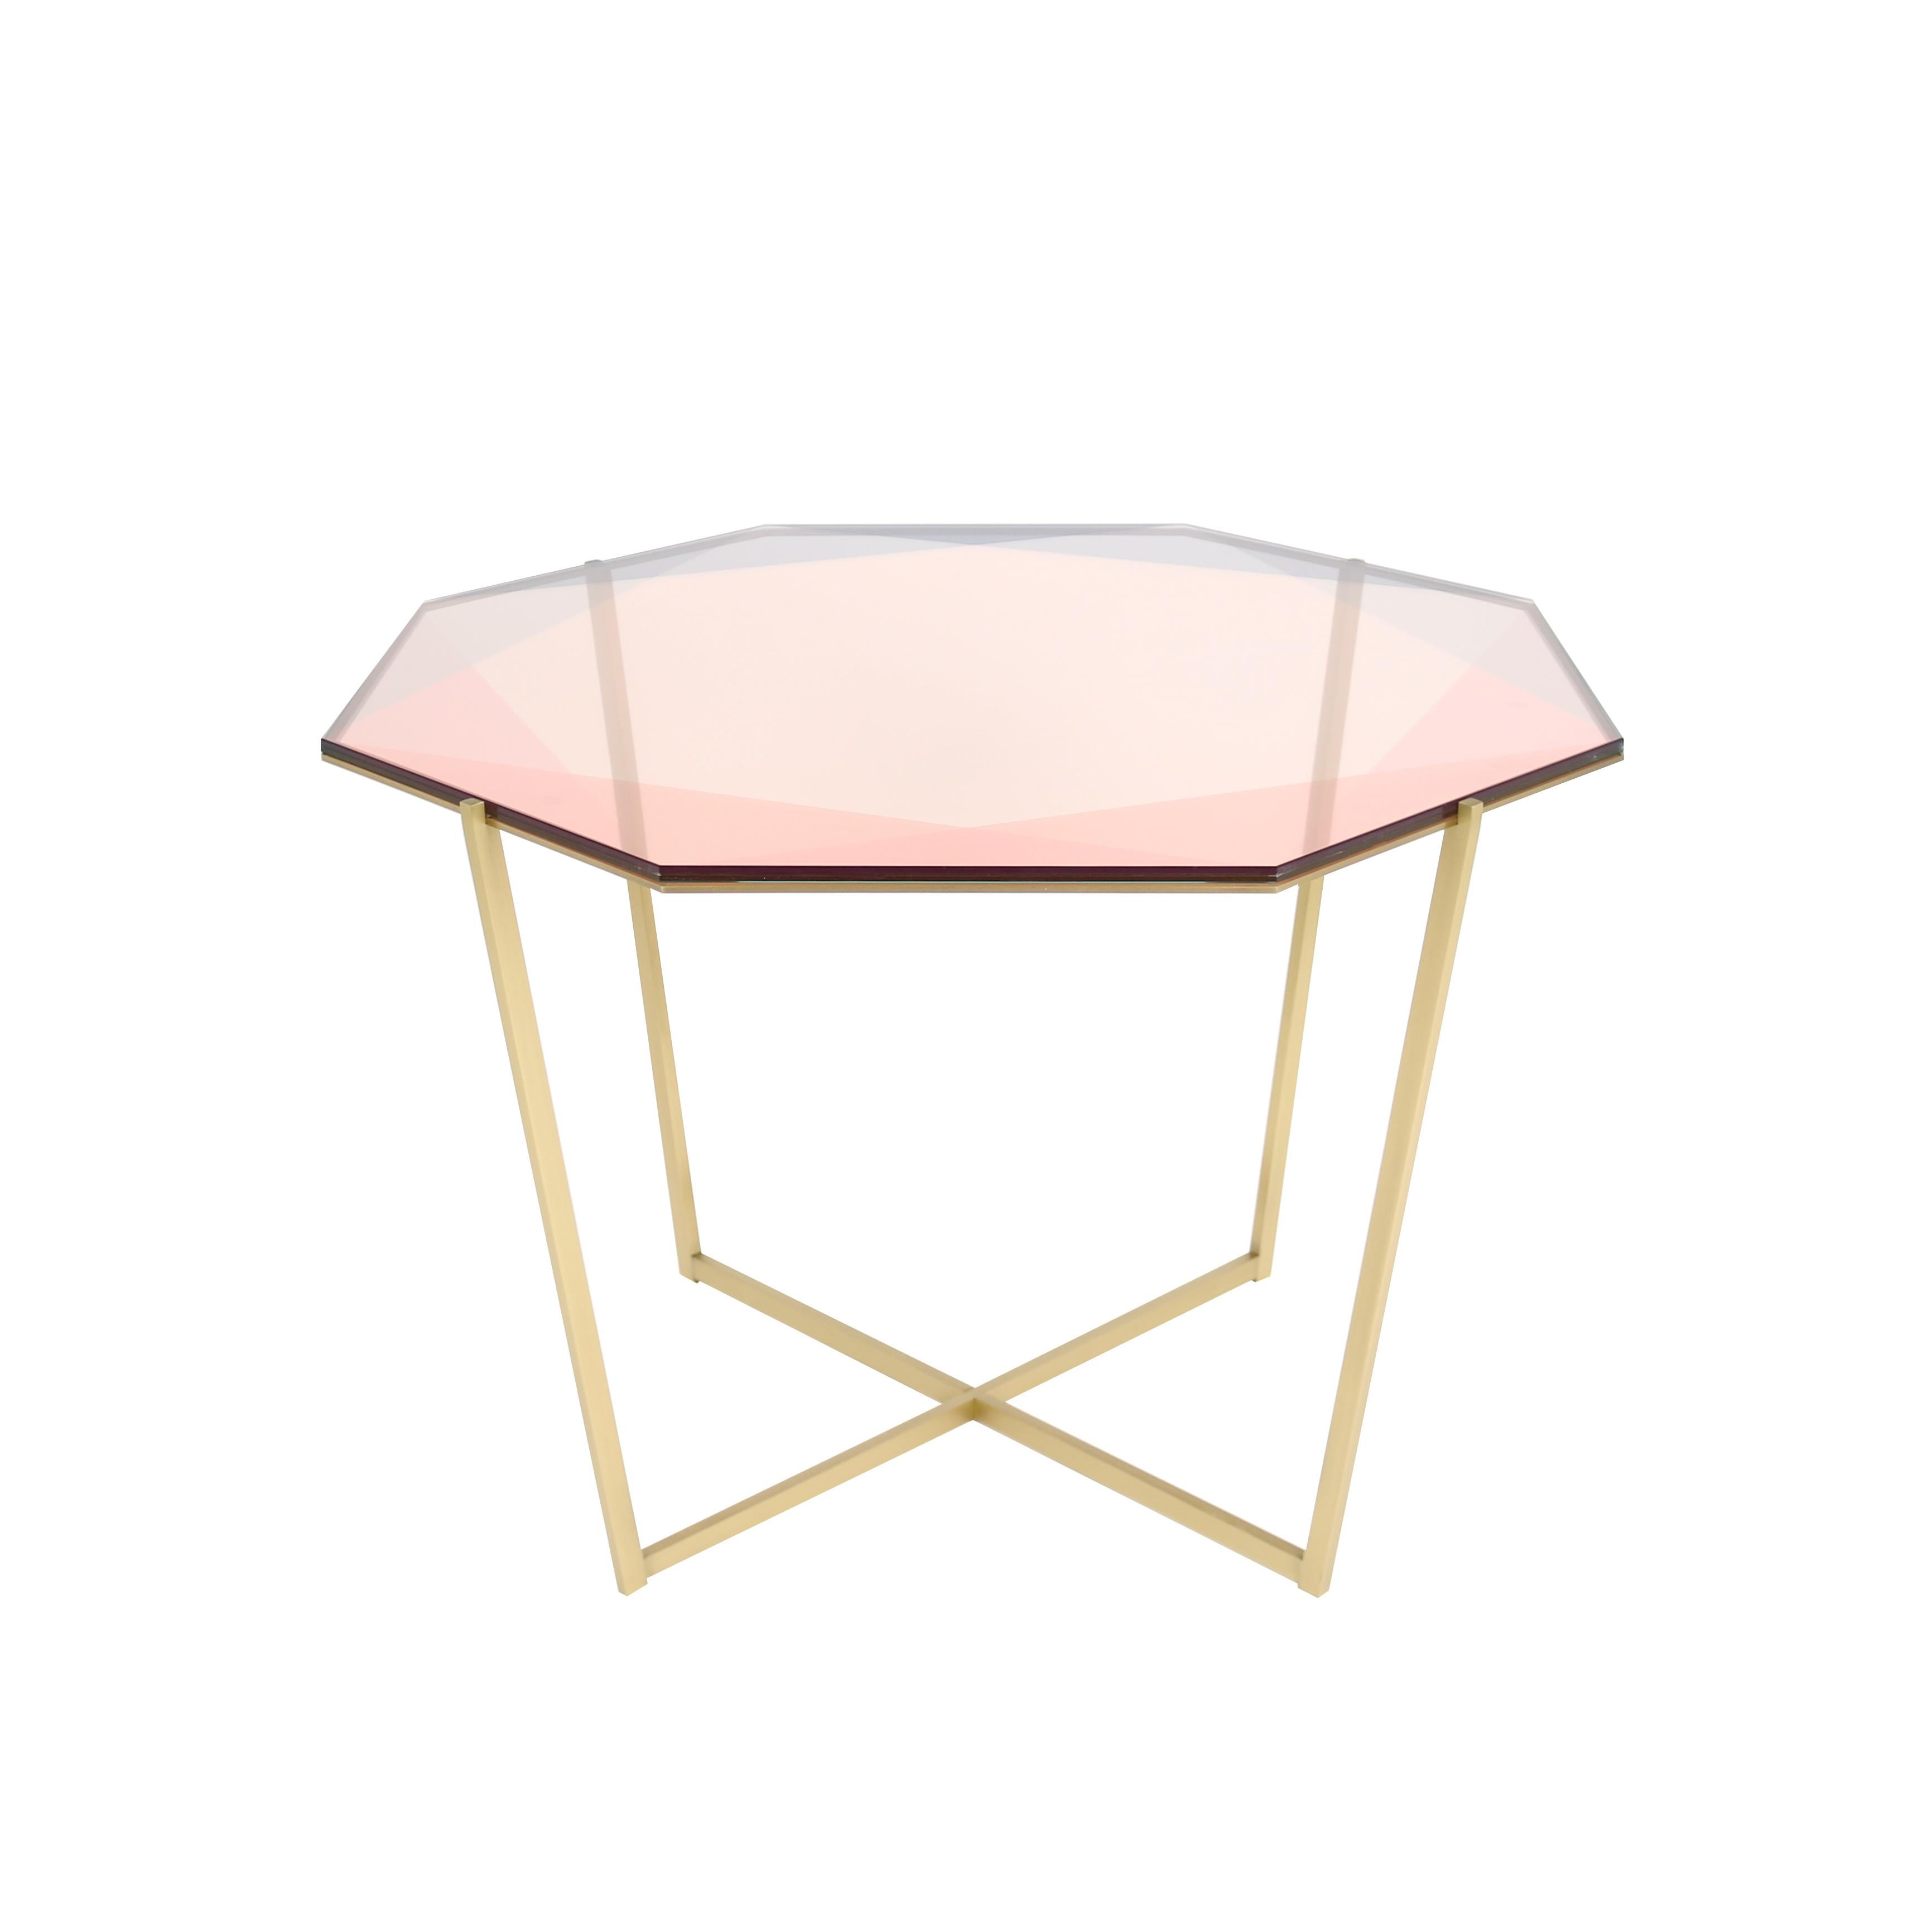 Gem Octagonal Dining Table / Entry Table-Blush Glass w/ Brass Base by Debra Folz